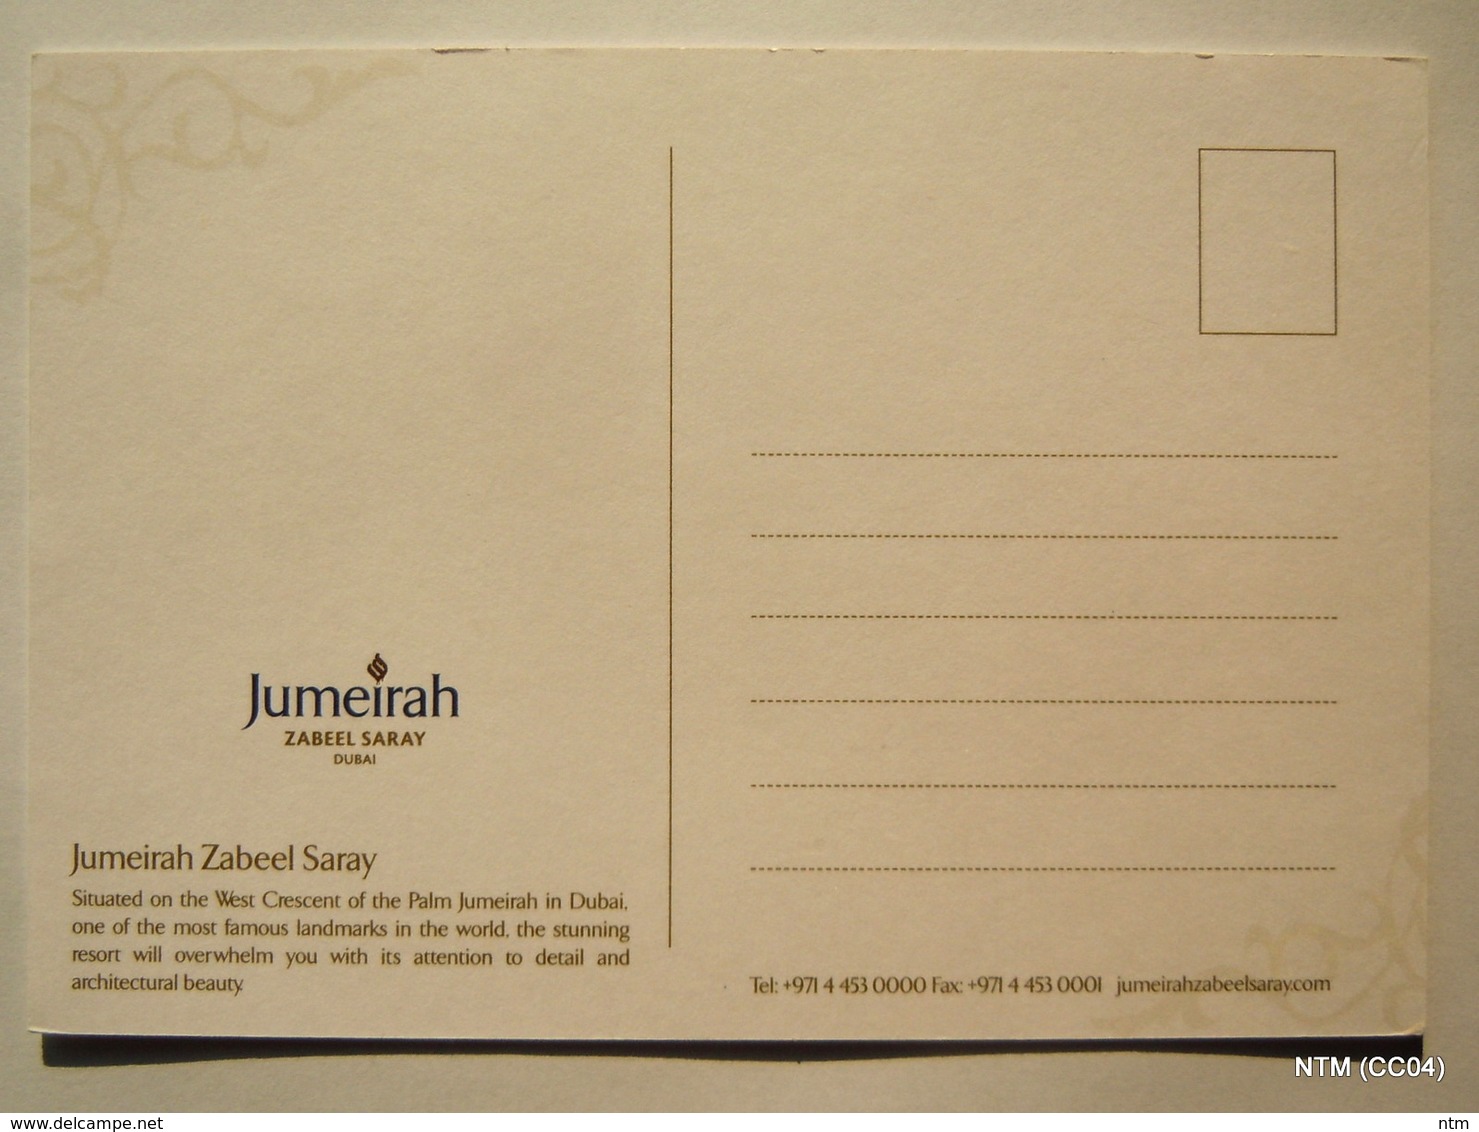 UAE DUBAI Picture Post Card (with An Envelope) Showing The Hotel 'Jumeirah Zabeel Saray' In Dubai, UAE - Dubai